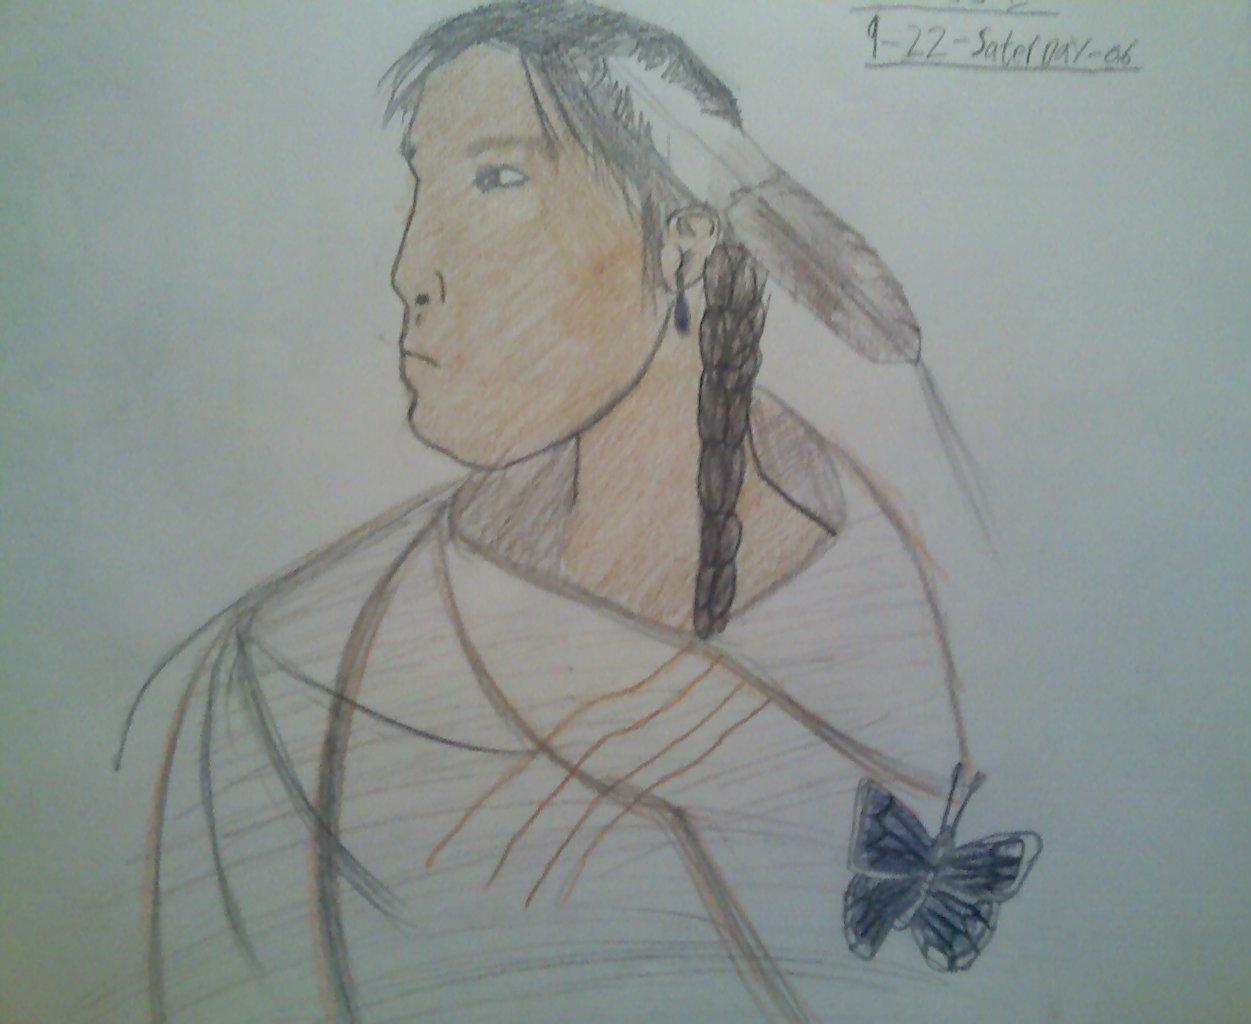 Native american women by marisa937